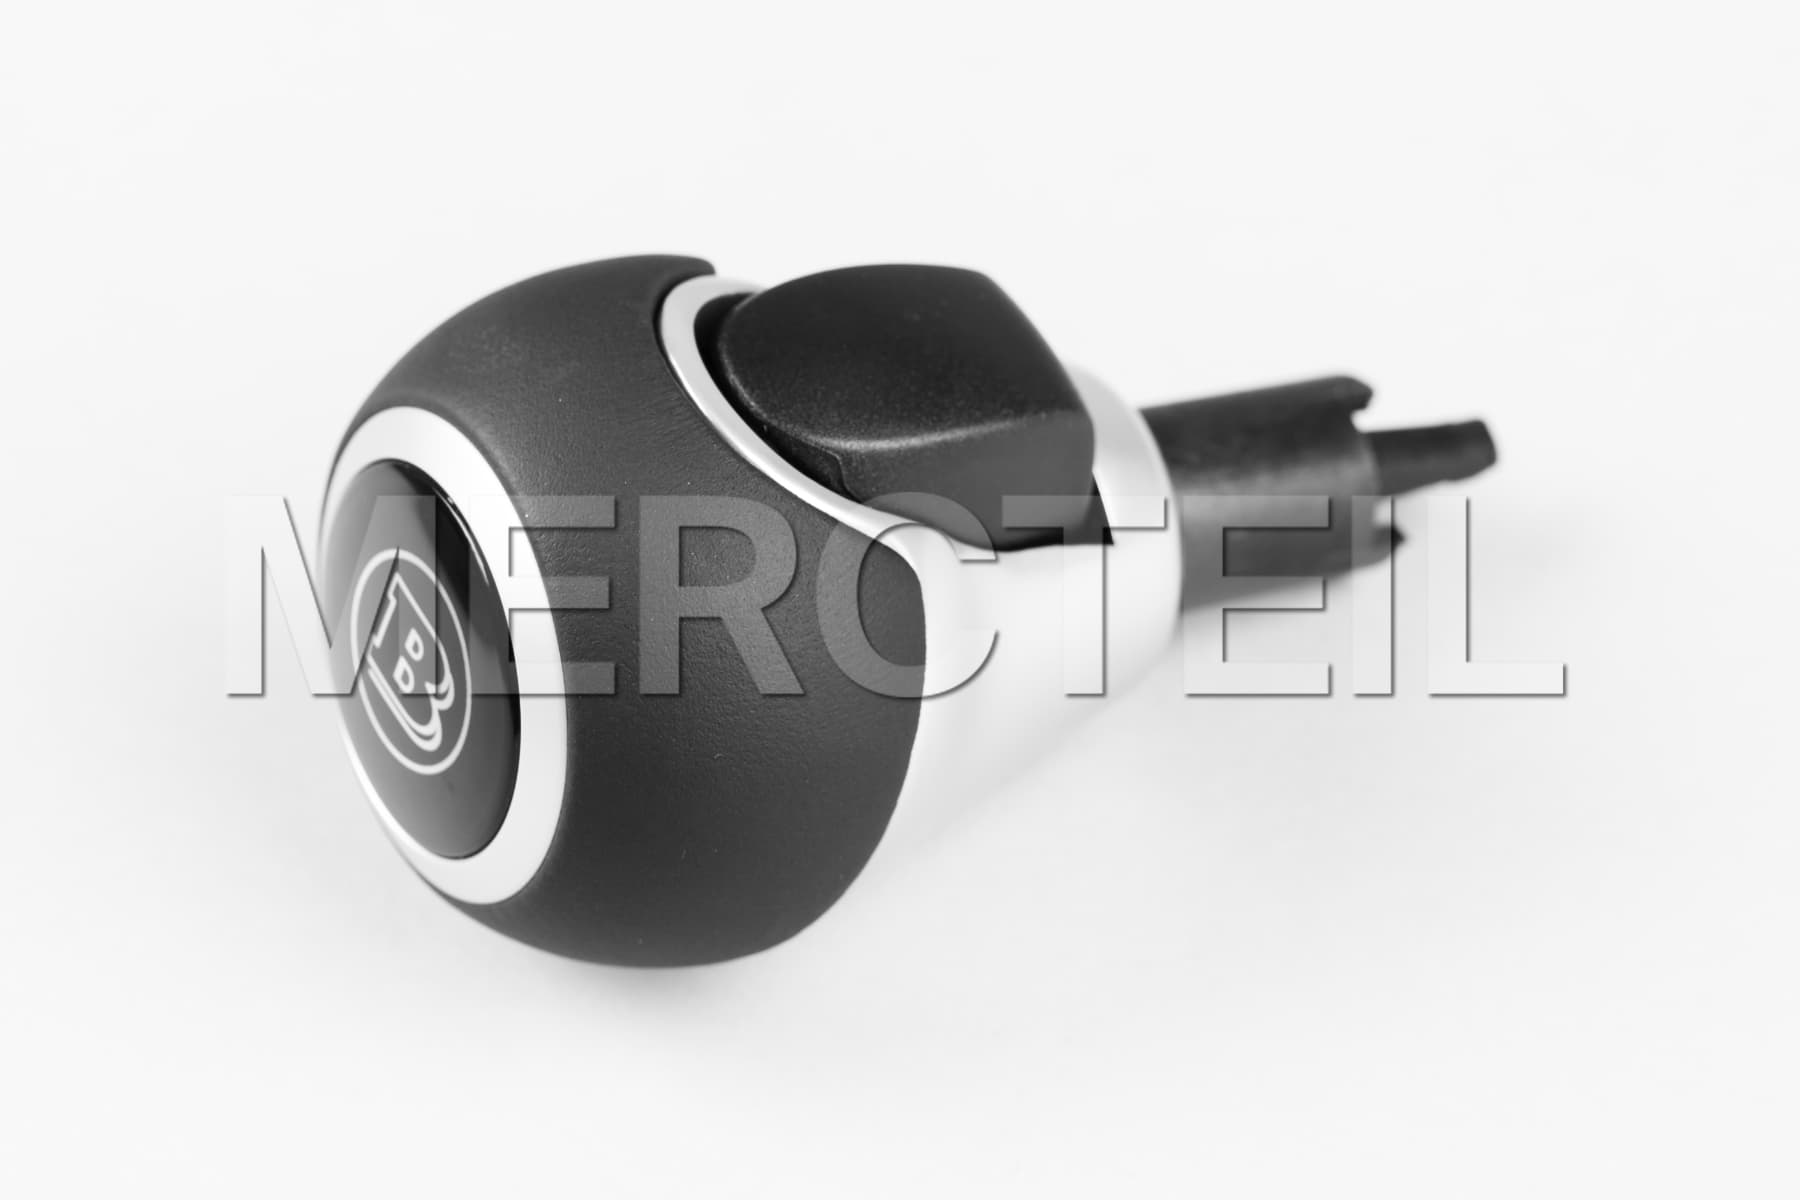 BRABUS Getriebe Selector für Smart 453 Original BRABUS (Teilenummer: A4532770100)